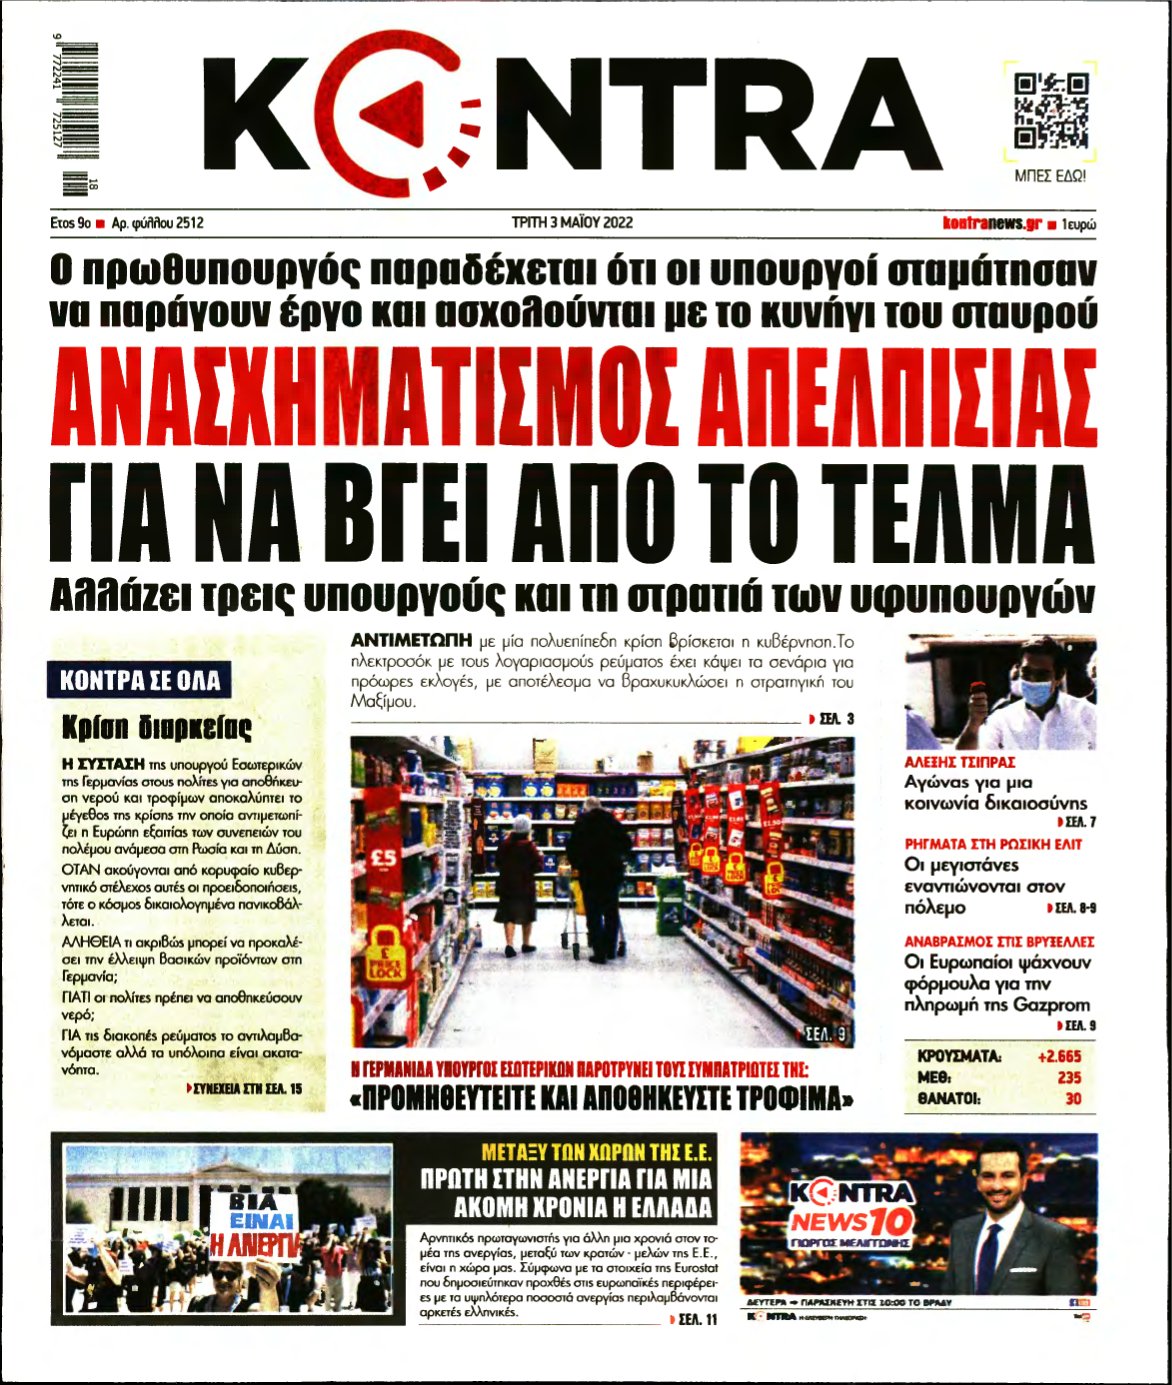 KONTRA NEWS – 03/05/2022